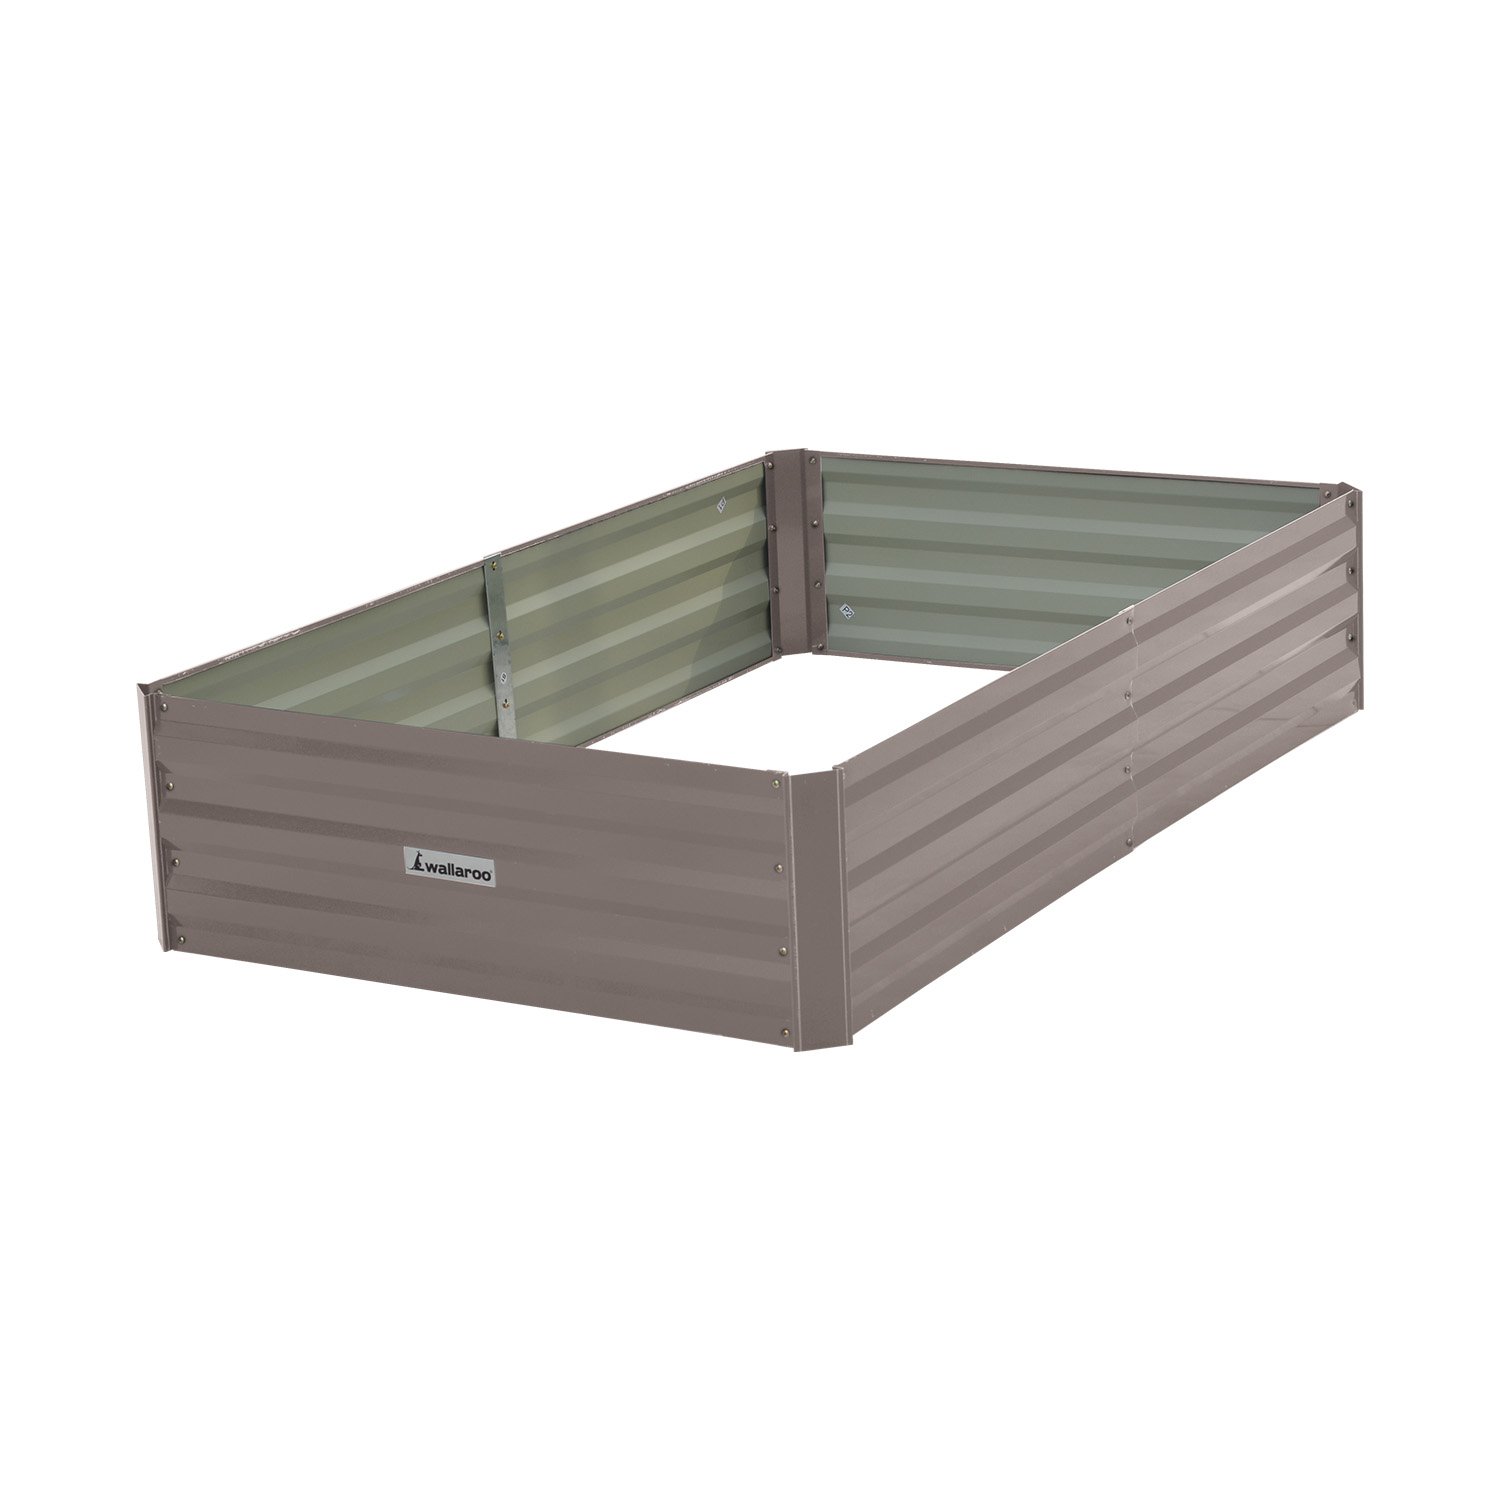 Wallaroo Garden Bed 150 x 90 x 30cm Galvanized Steel - Grey 1